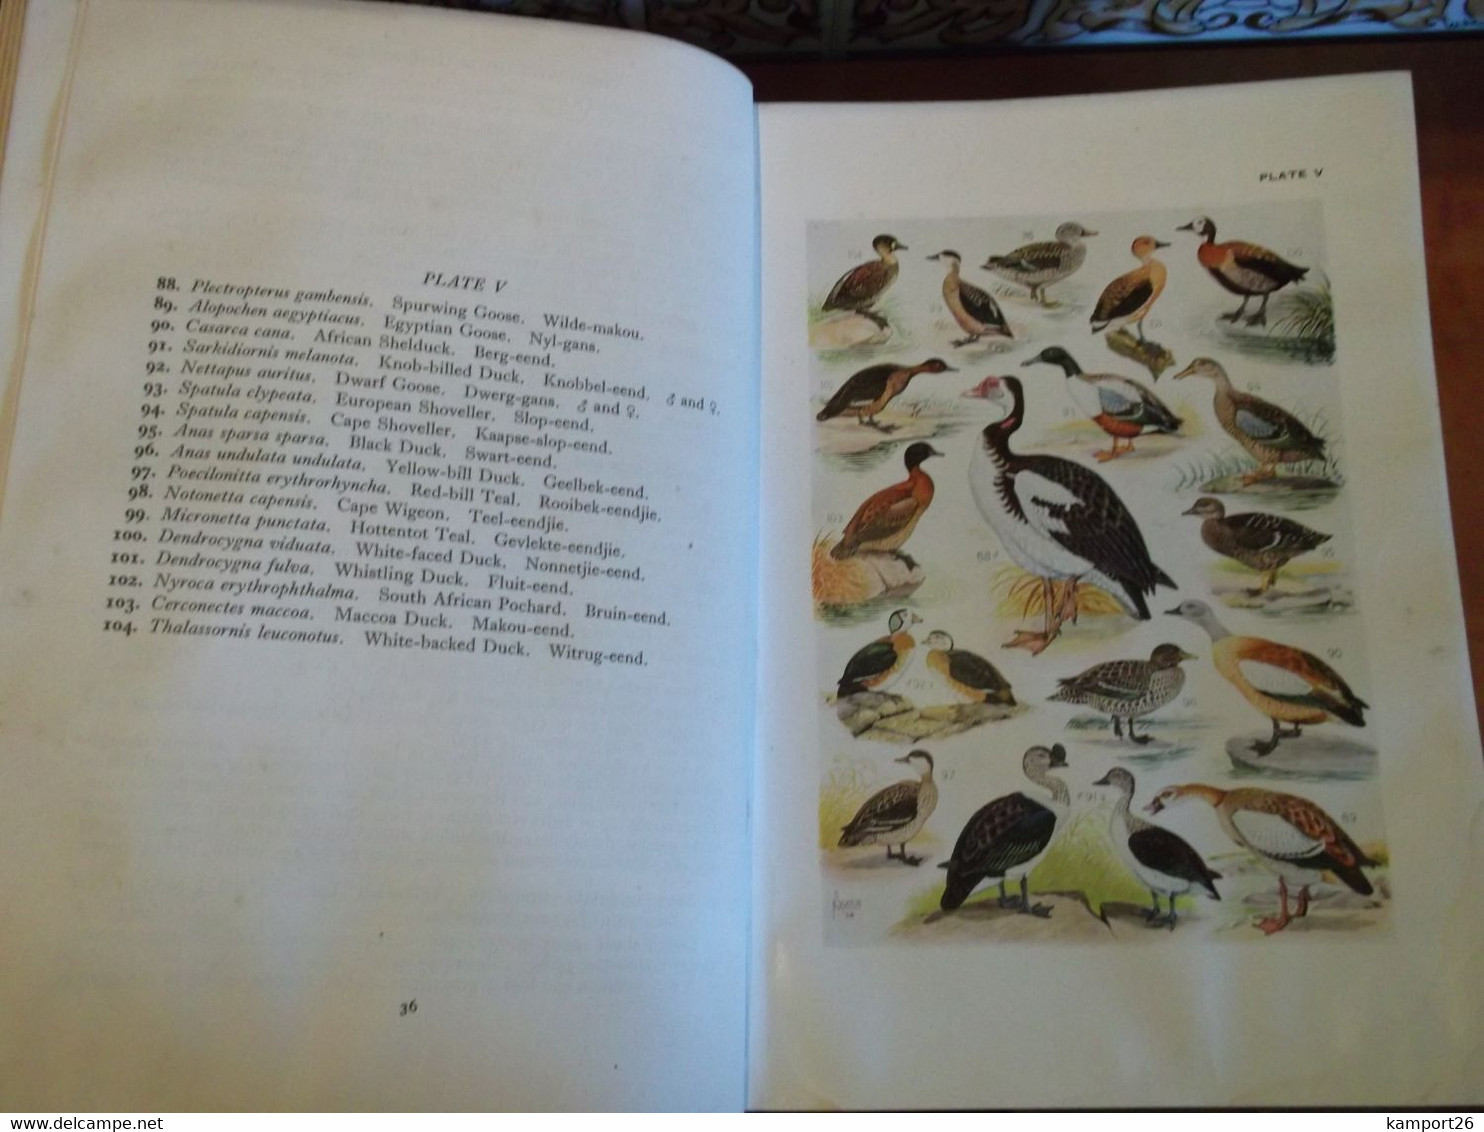 1953 The Birds Of South Africa AUSTIN ROBERTS Ornithology Le Monde De L'ornithologie - Wildlife